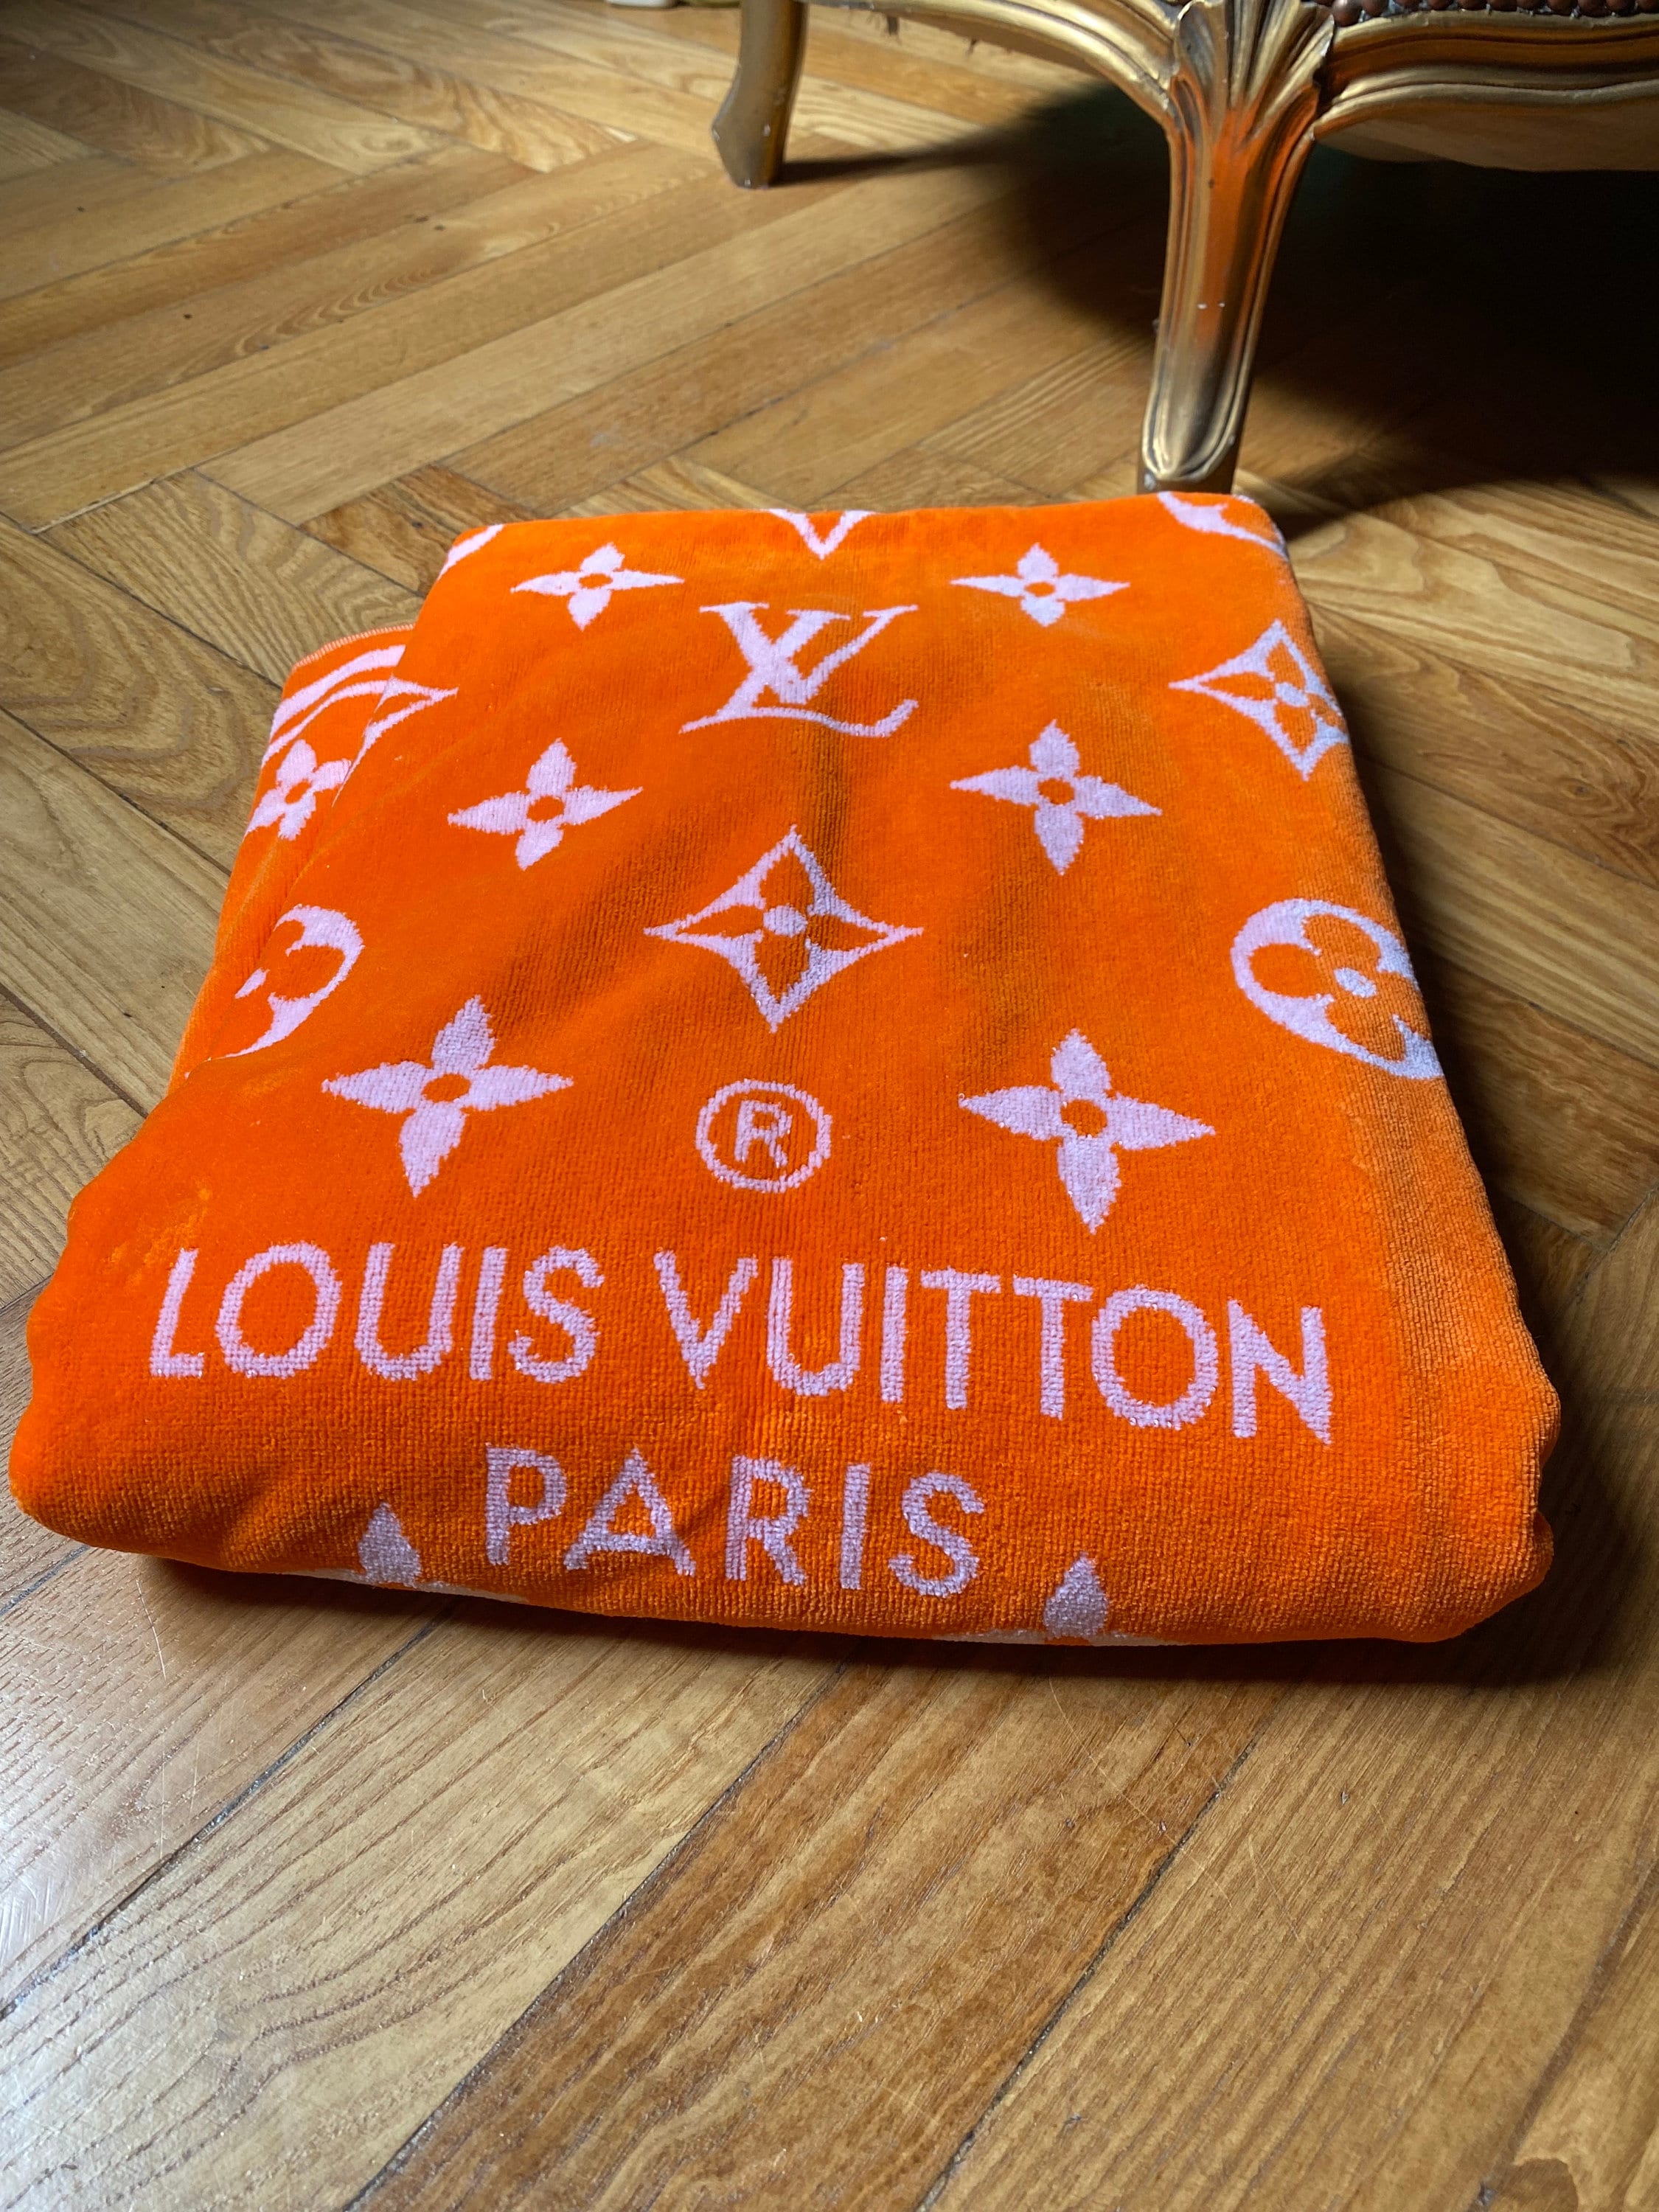 towel bath louis vuitton - Recherche Google  Louis vuitton handbags,  Vuitton, Louie vuitton